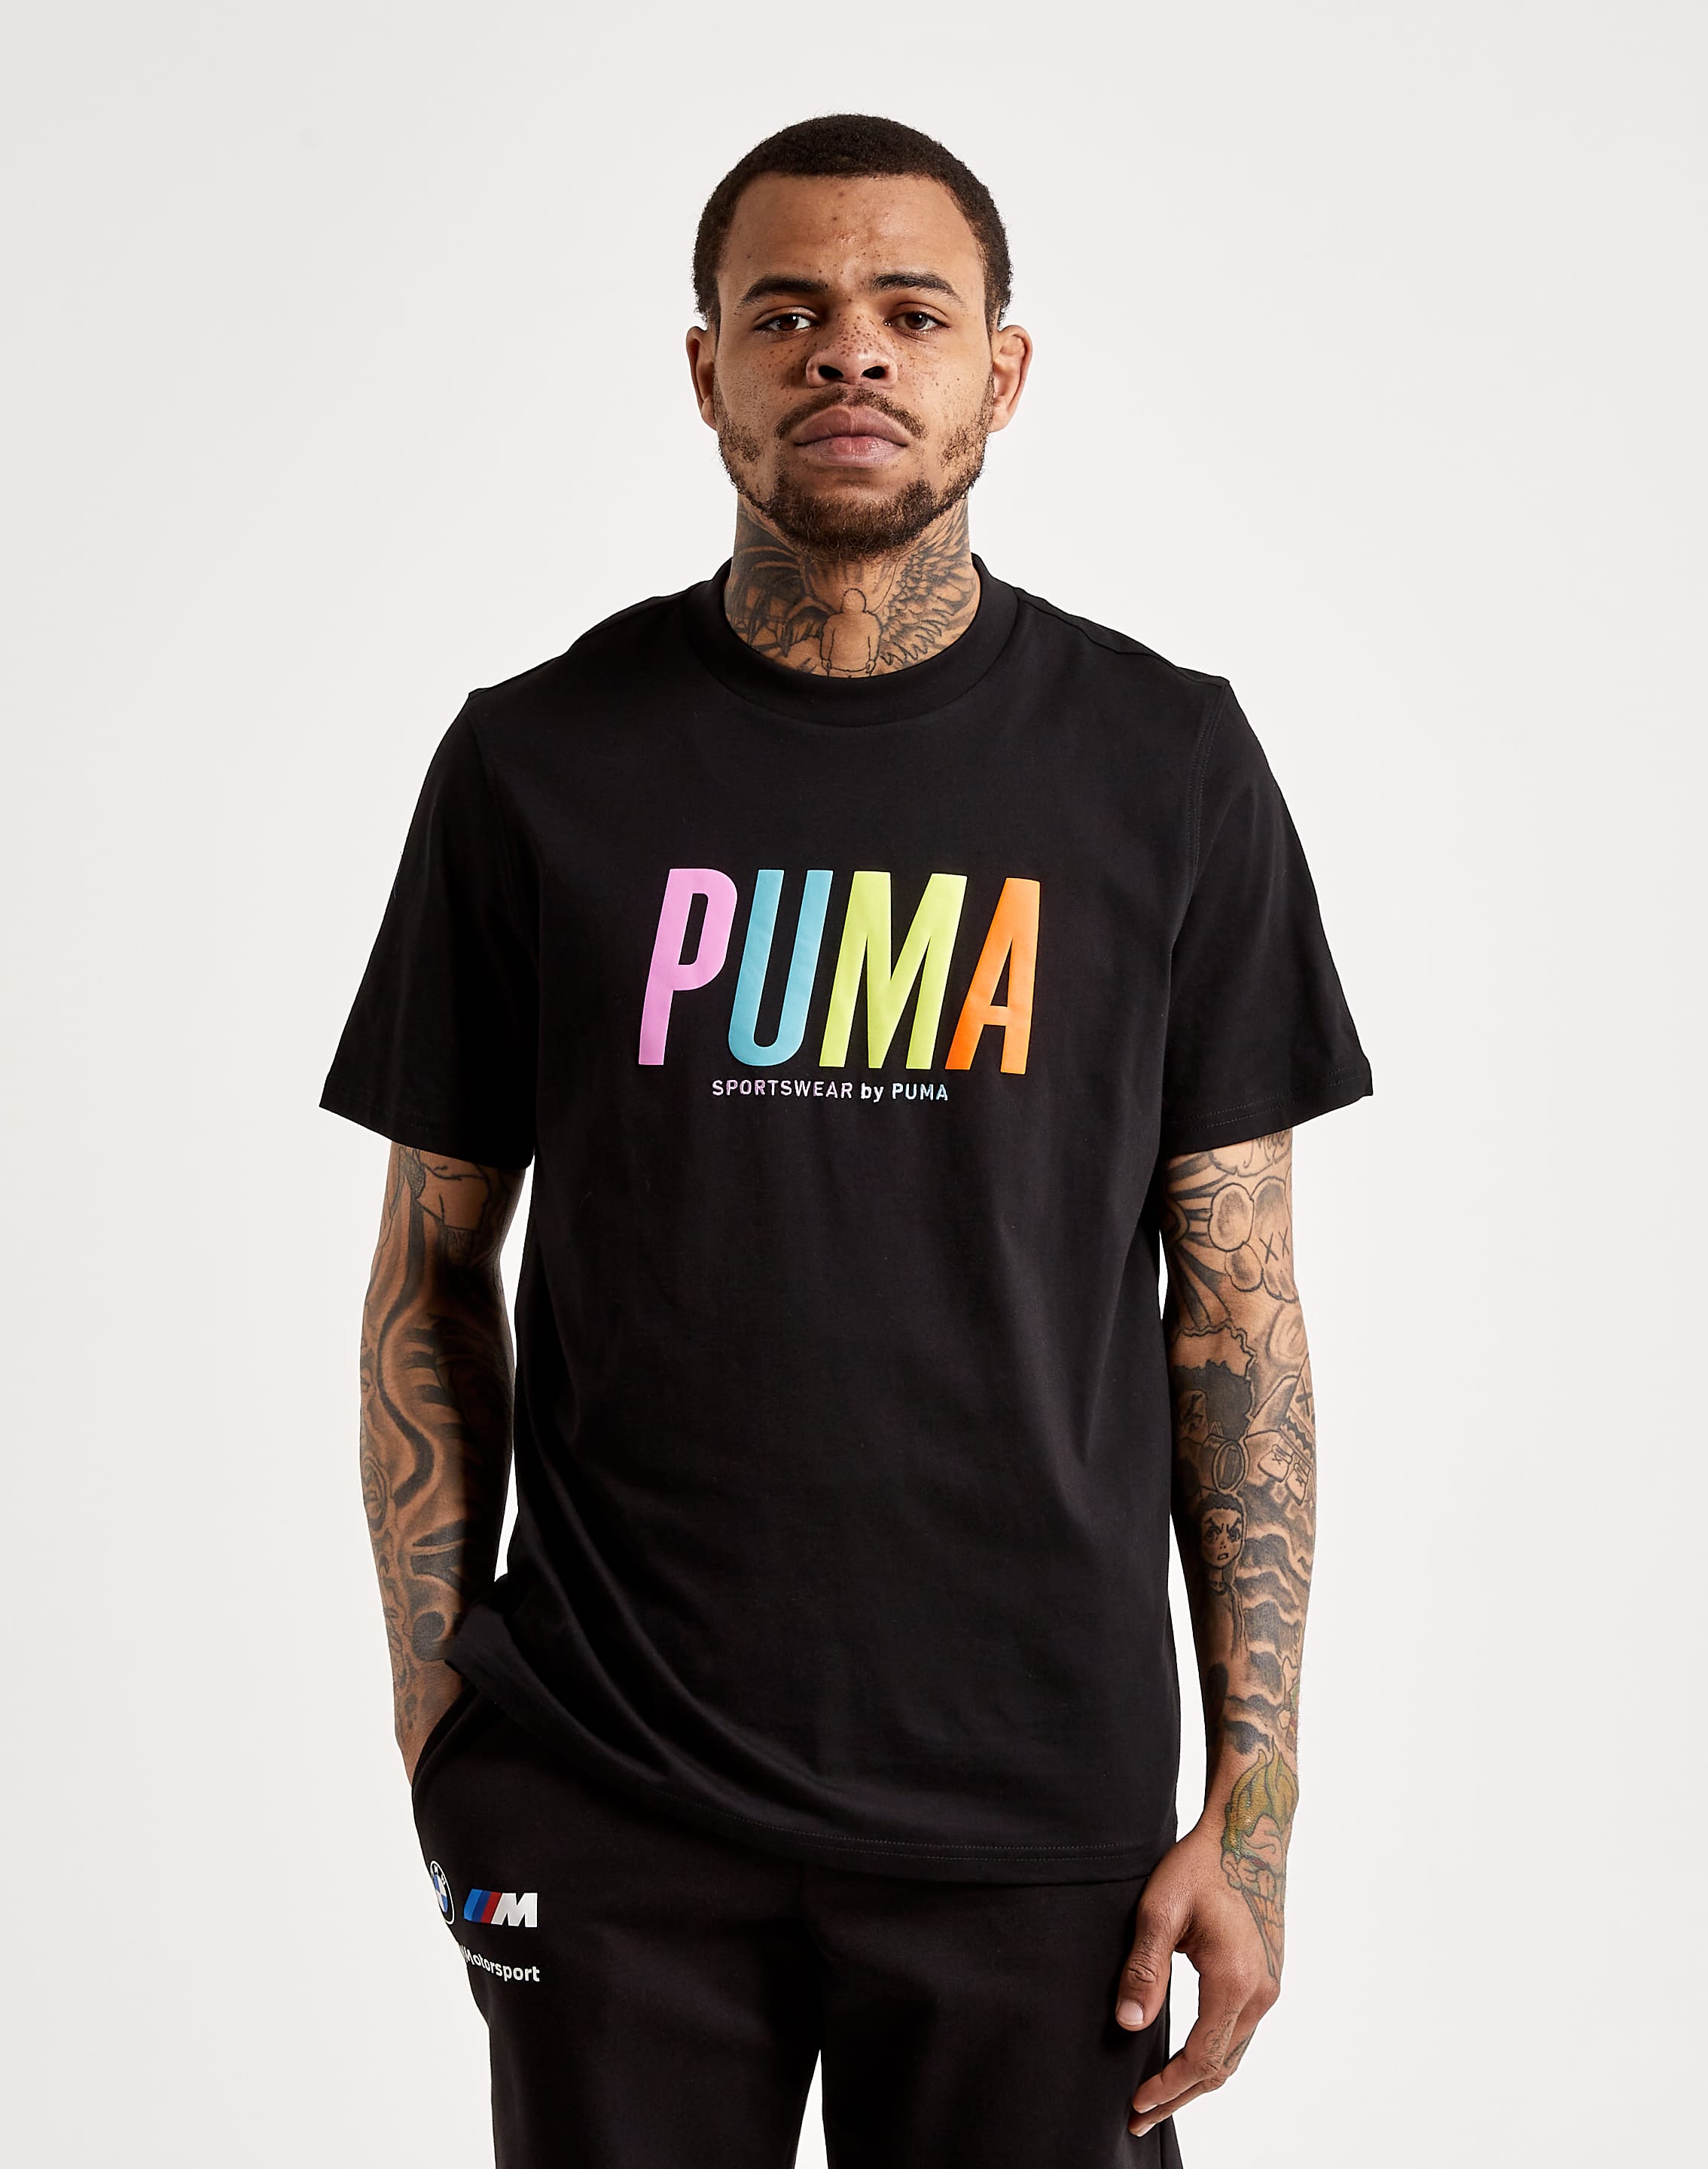 Puma Sportswear By Puma Graphic DTLR Tee –